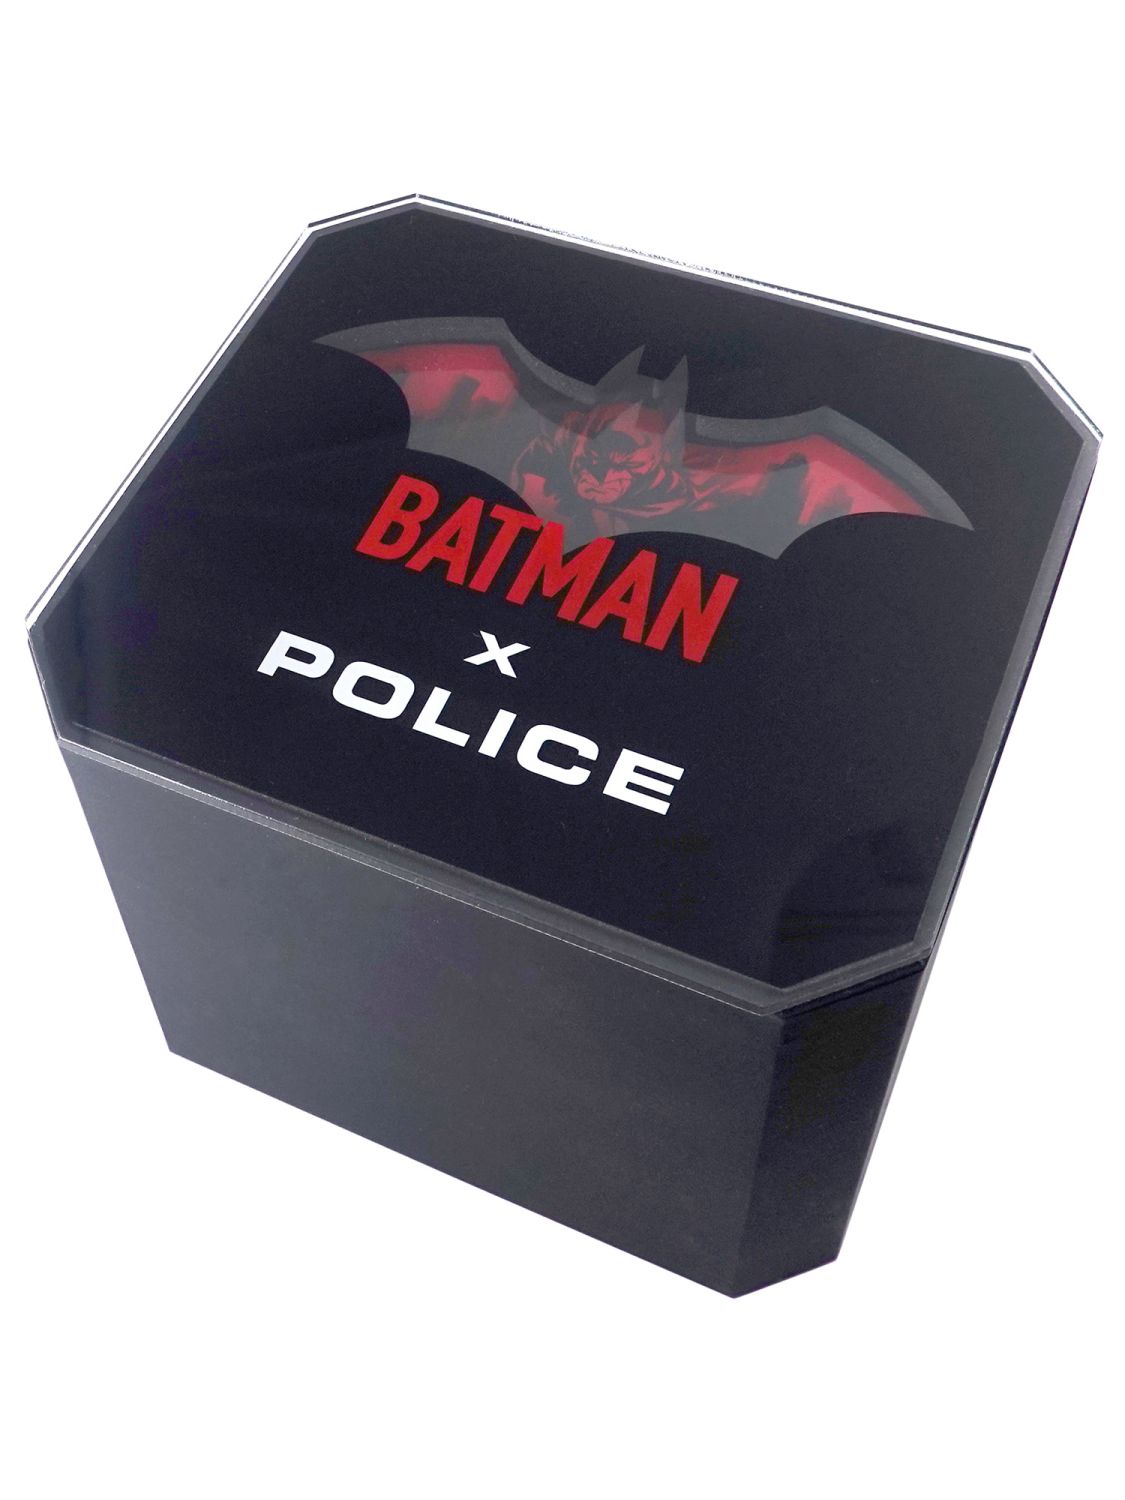 • Batman Limited uhrcenter Police PEWGE0022701 Automatic Wristwatch Black Edition